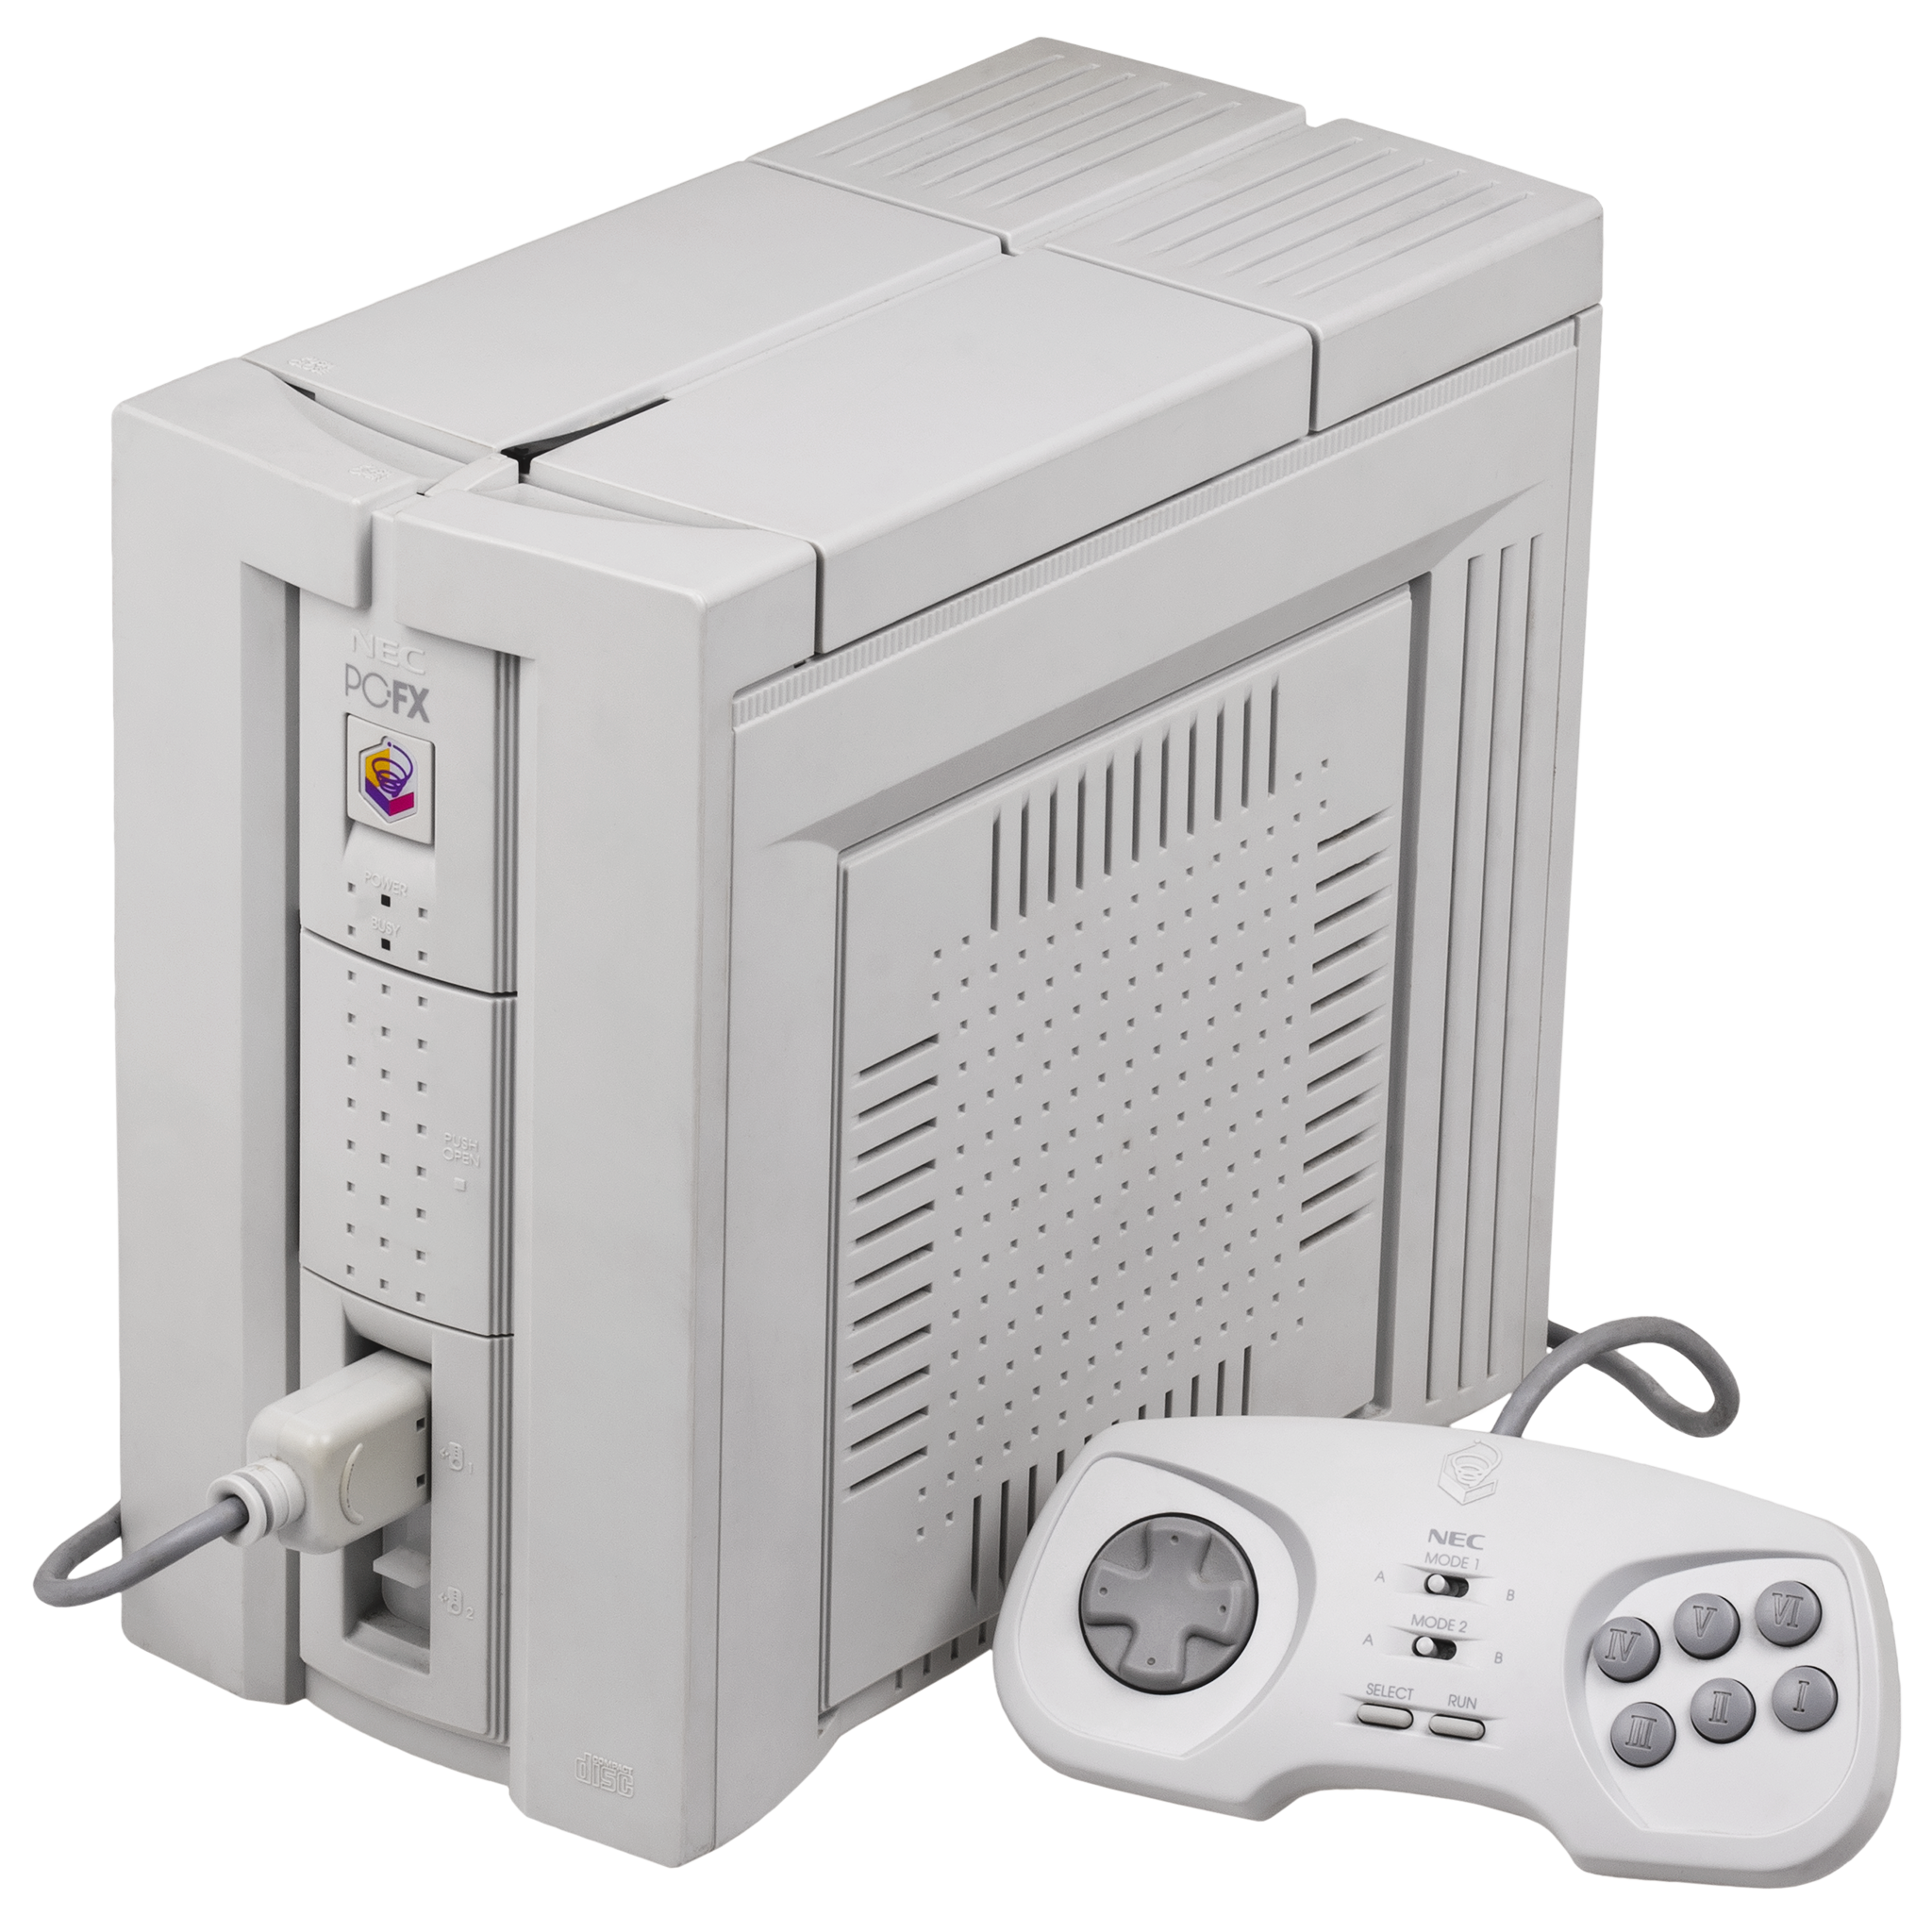 System: PC-FX [Console, 1994, NEC] - OC ReMix